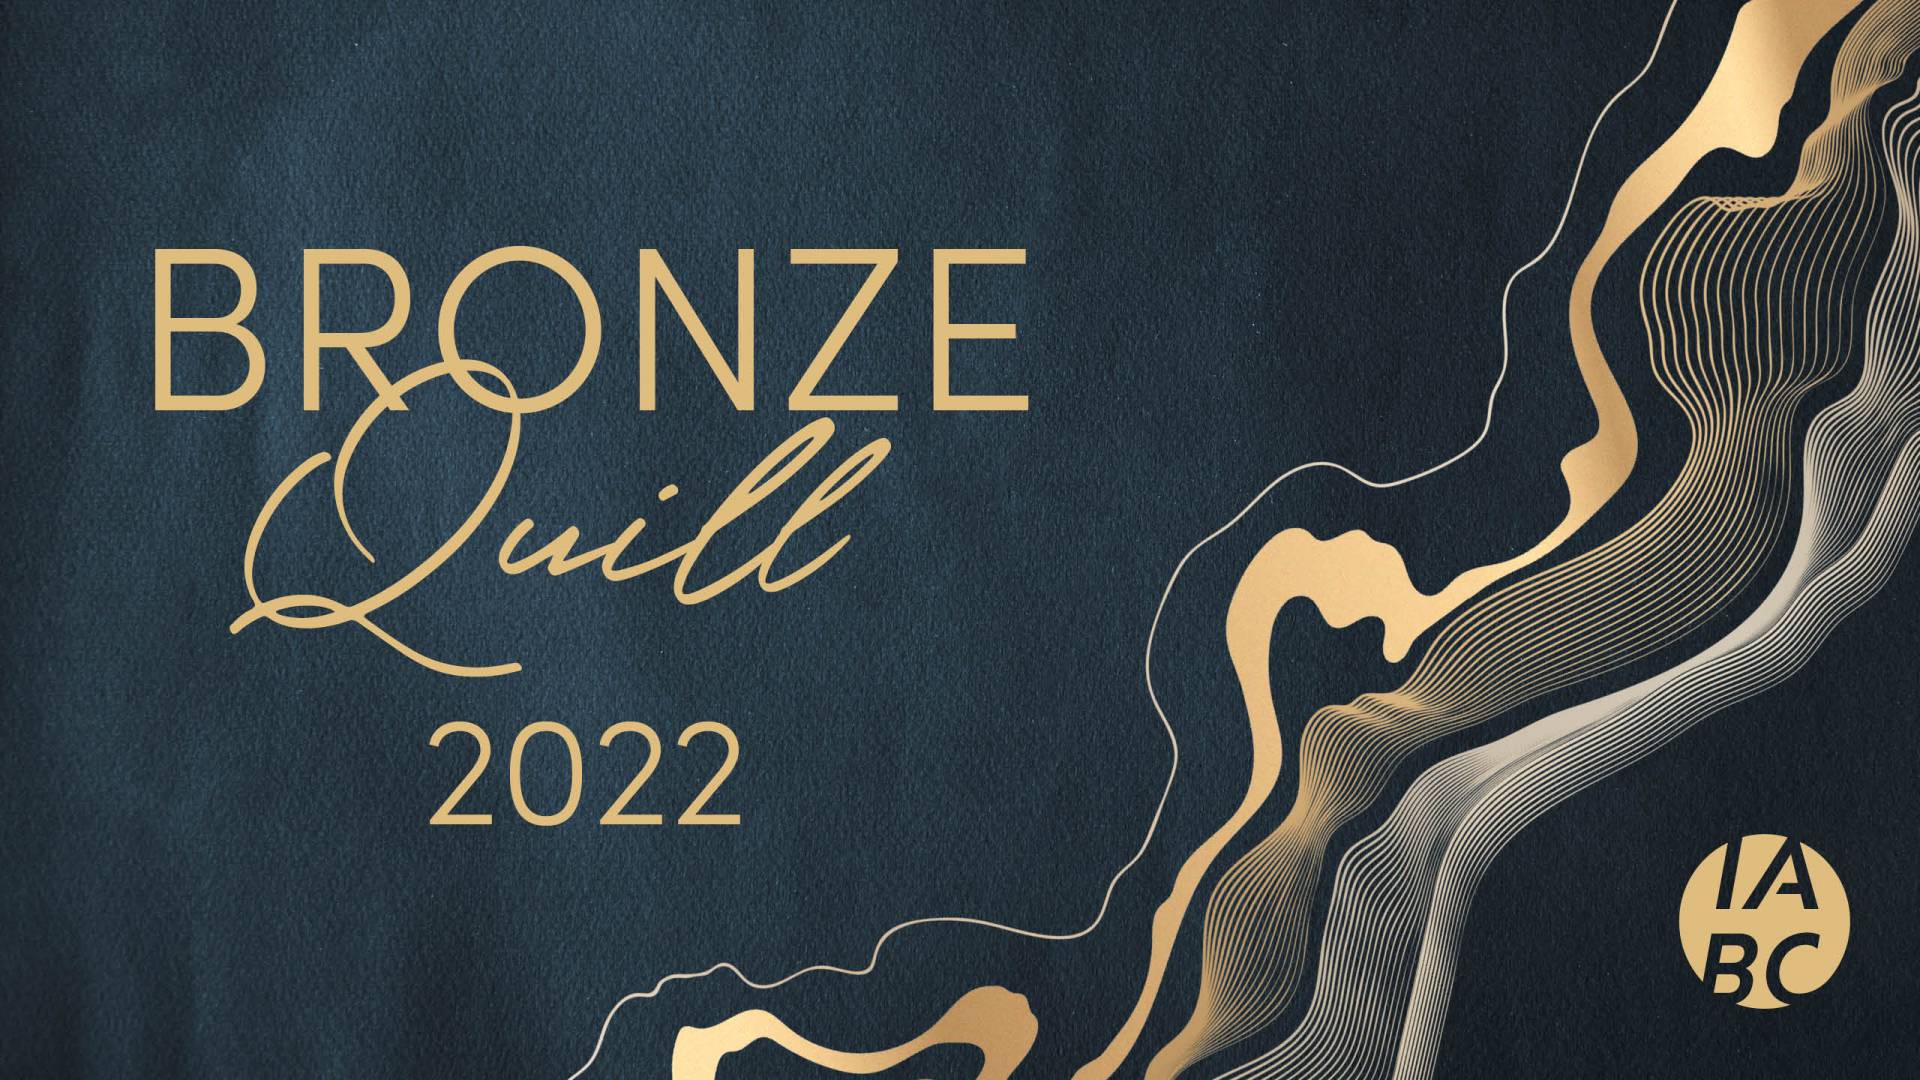 Bronze Quill Awards 2022